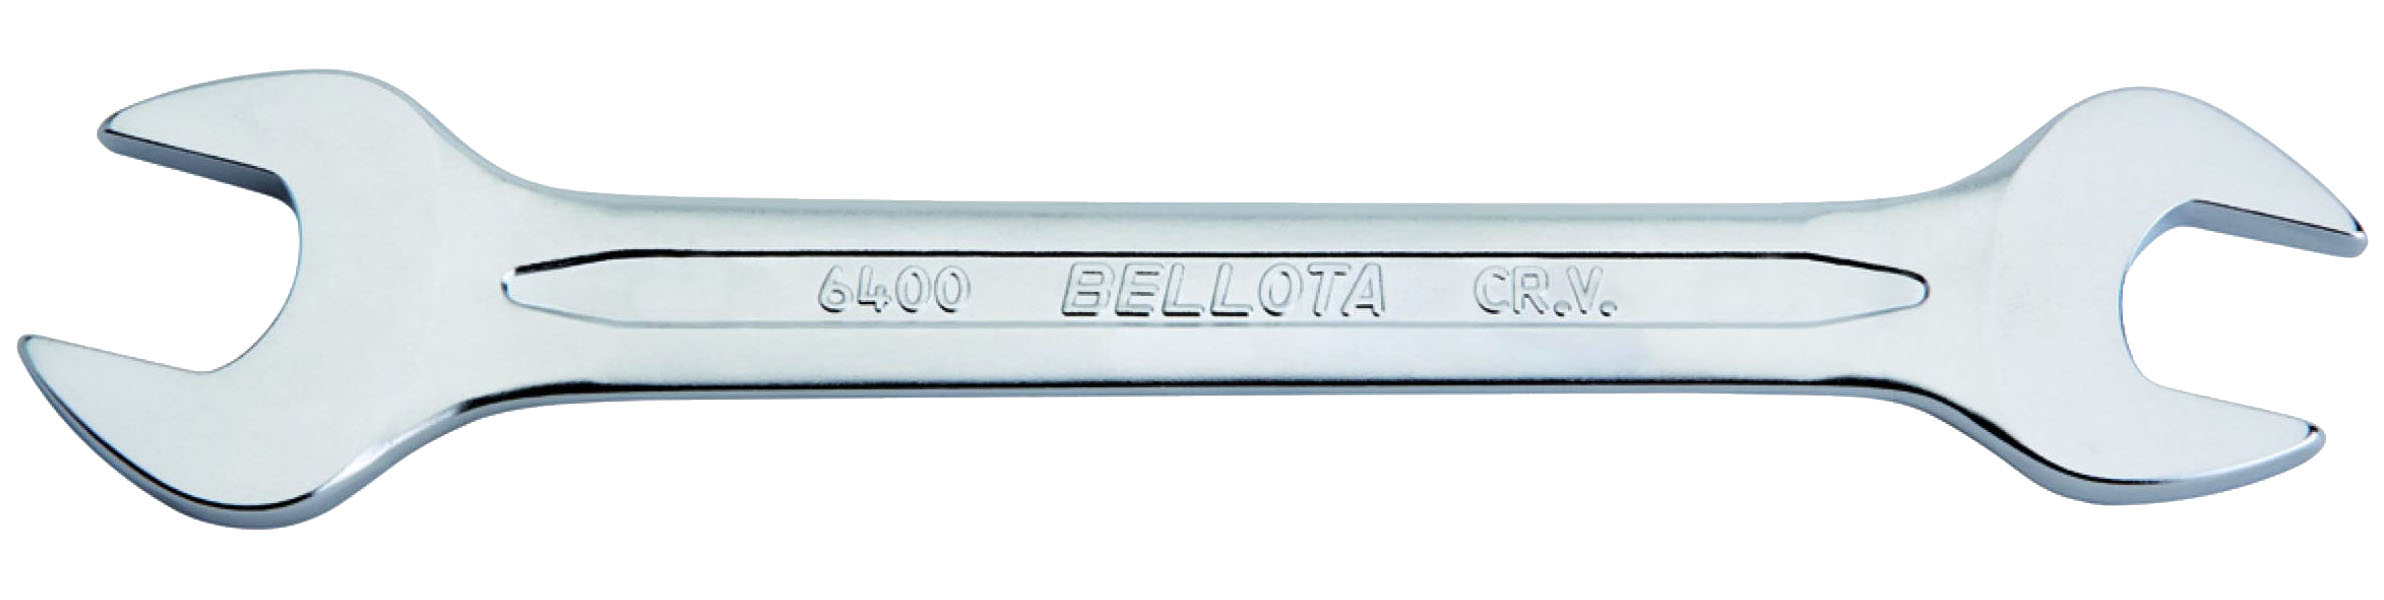 фото Bellota ключ рожковый 14х15 64001415